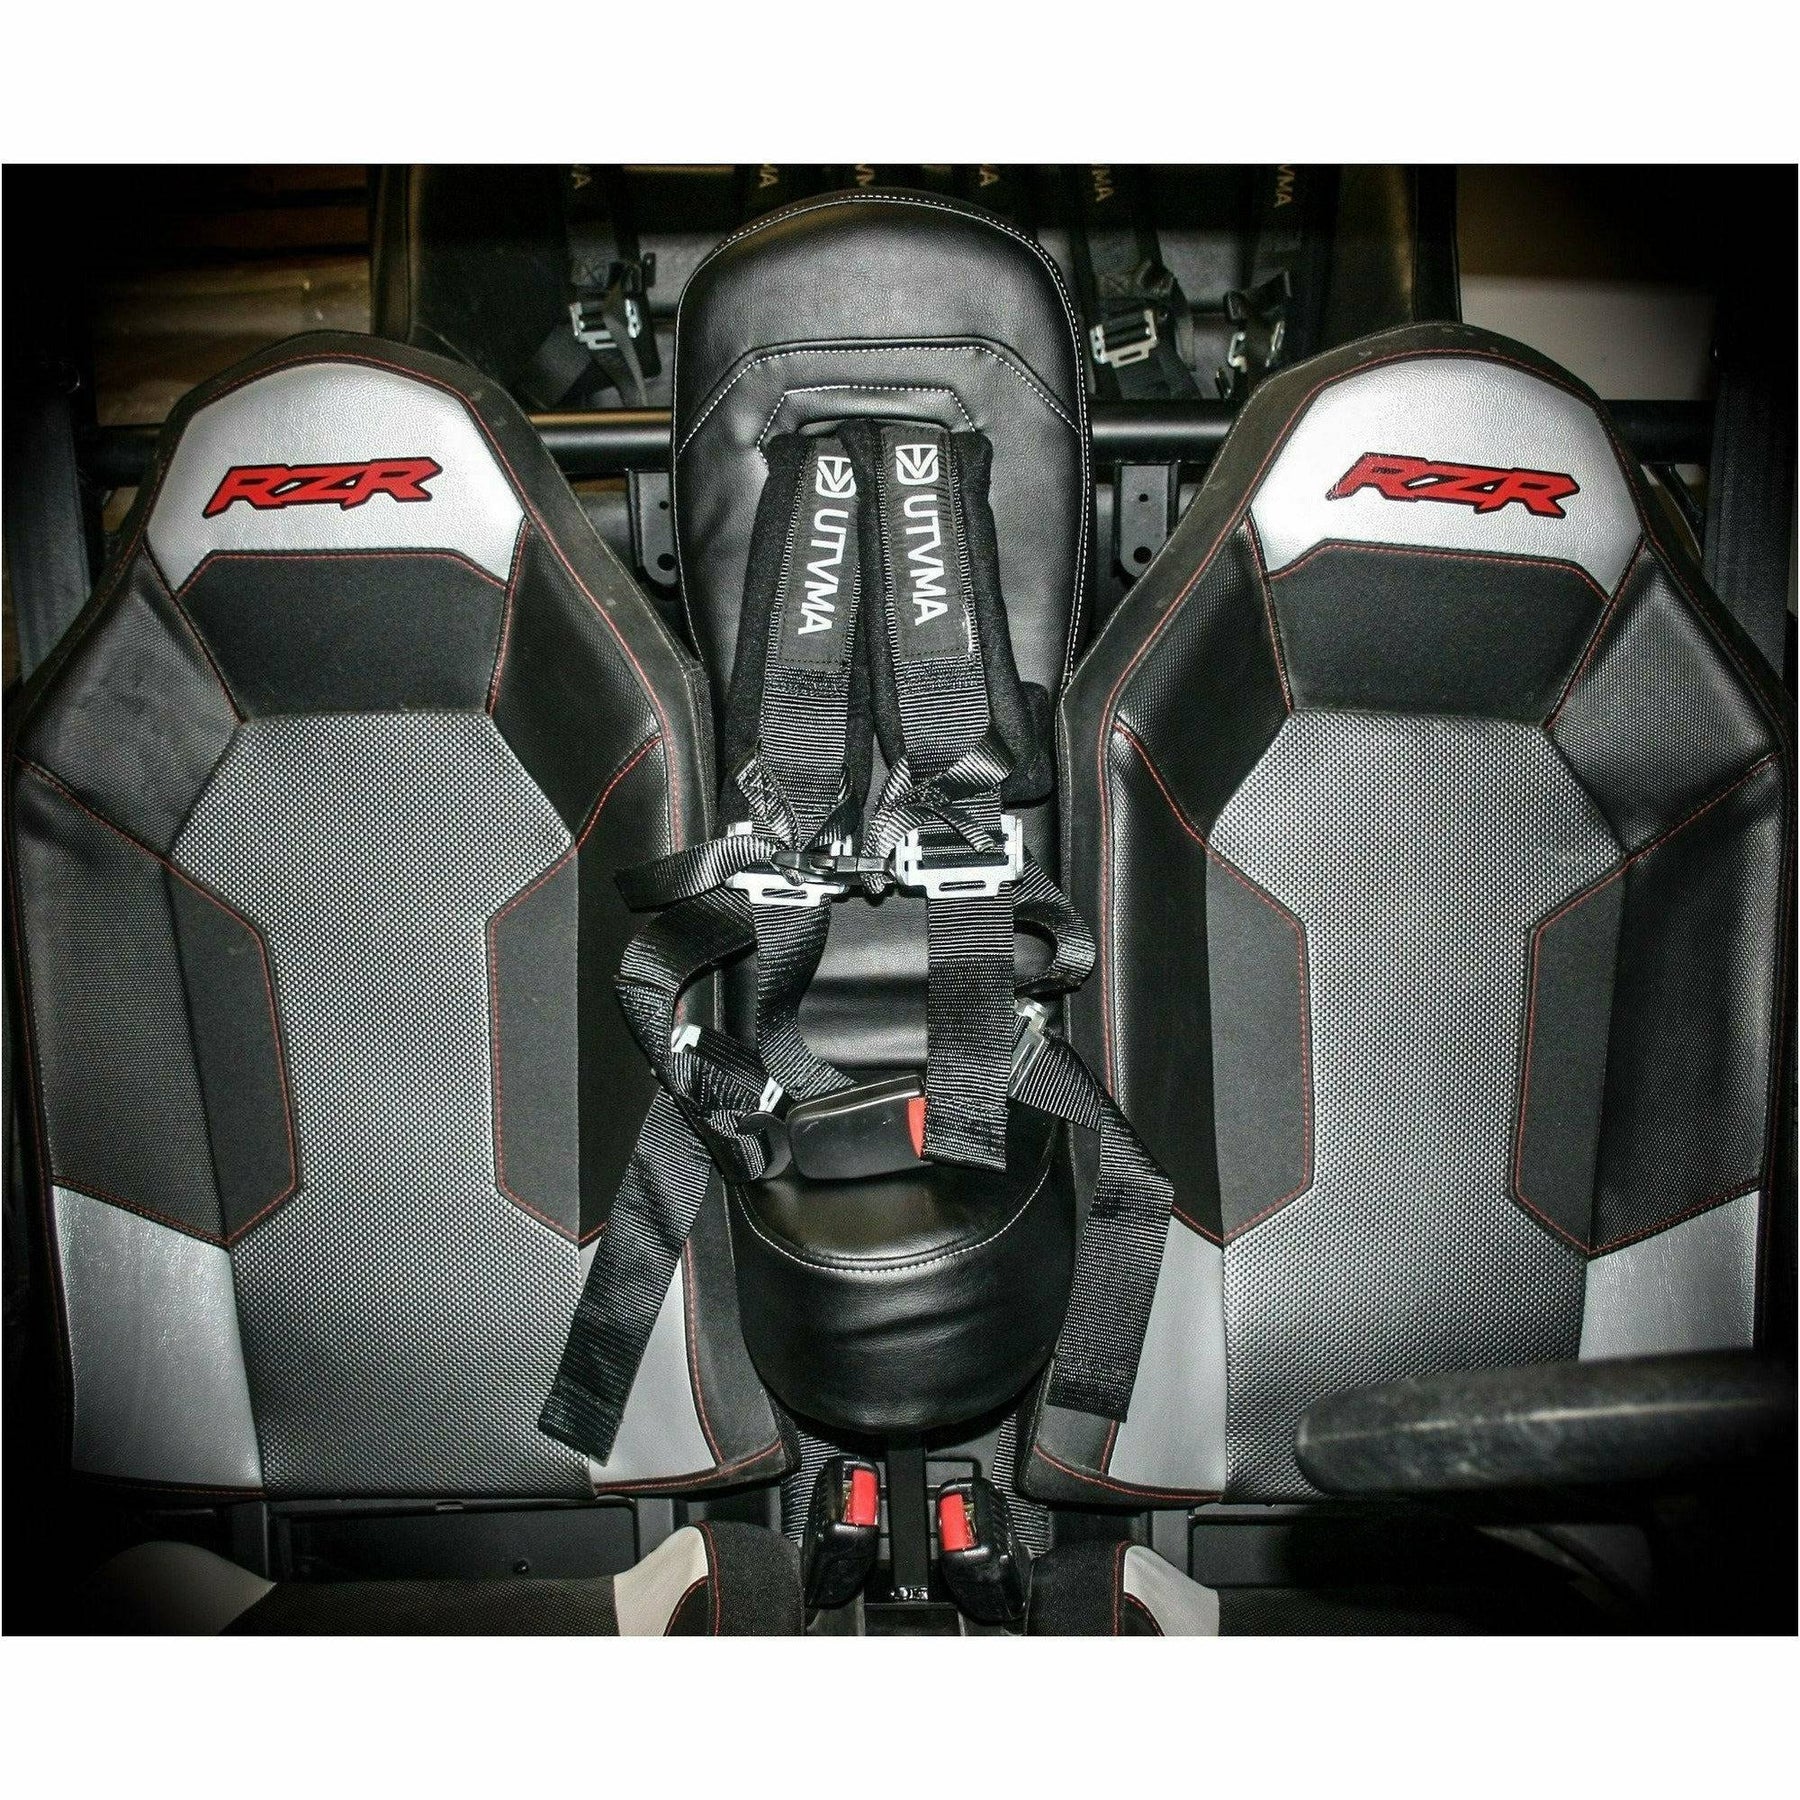 UTV Mountain Accessories Polaris RZR Bump Seat with Harness